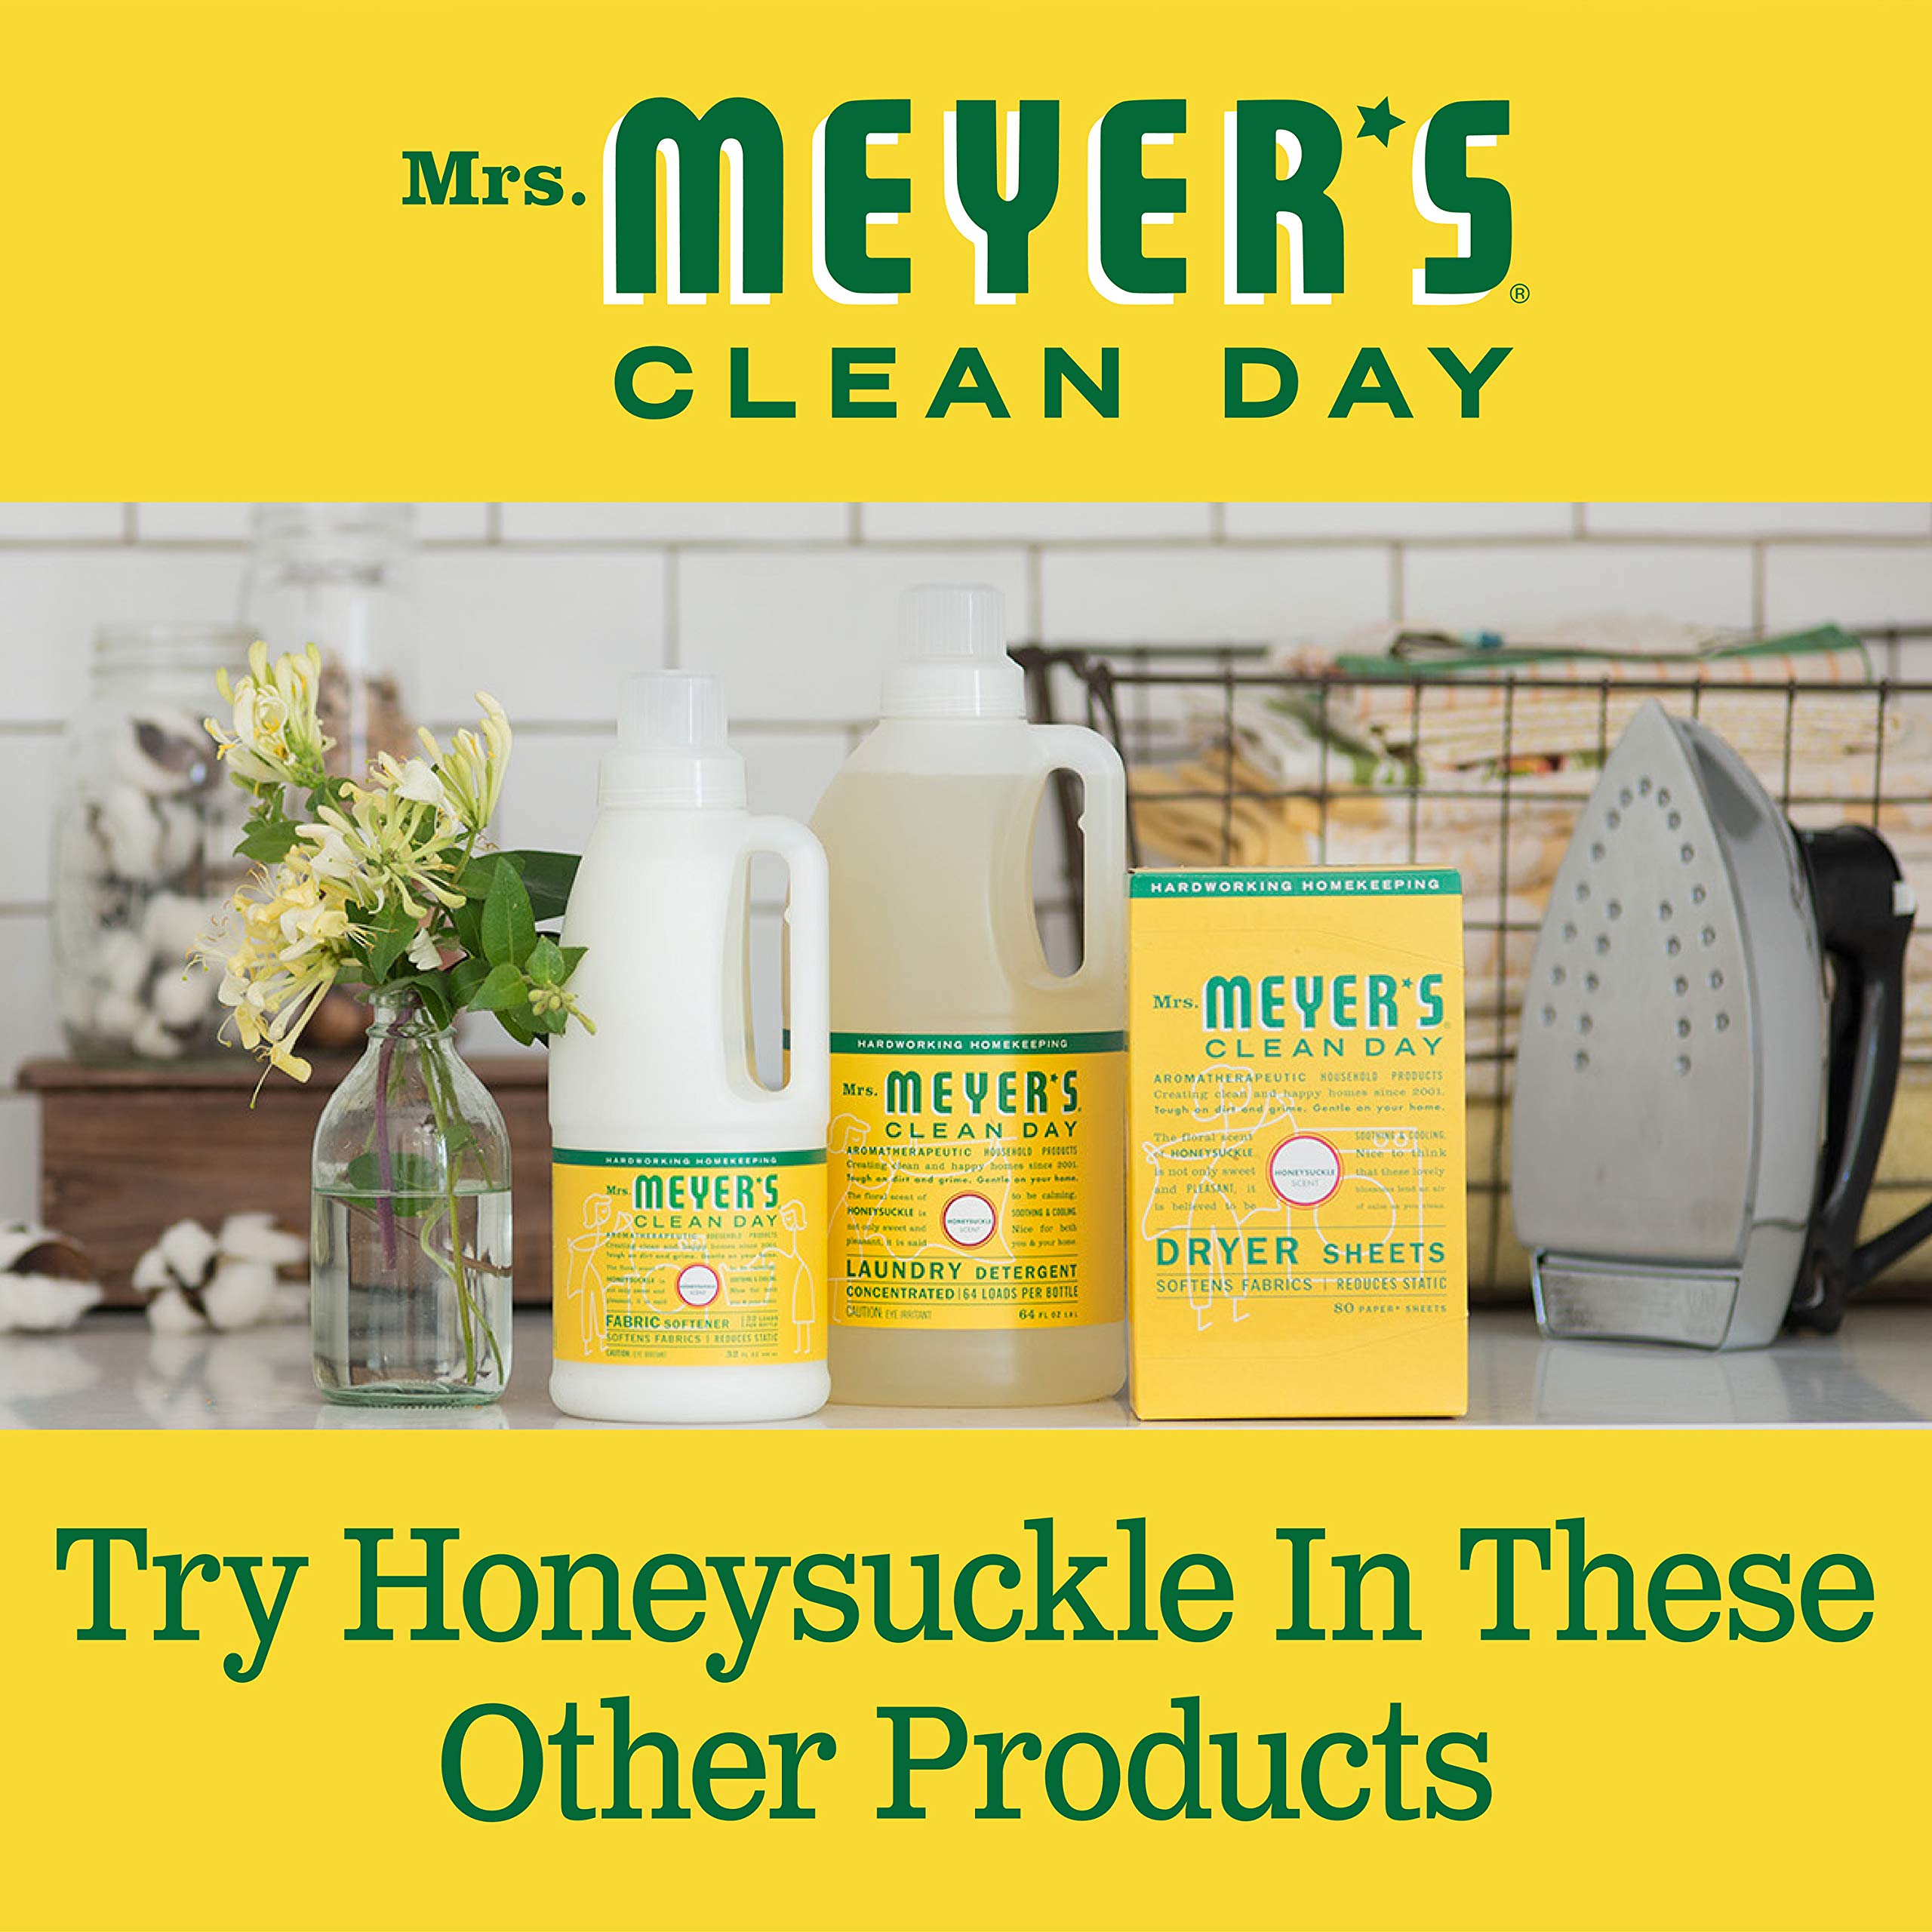 Mrs. Meyer's Hand Soap, Made with Essential Oils, Biodegradable Formula, Honeysuckle, 12.5 fl. oz - Pack of 3